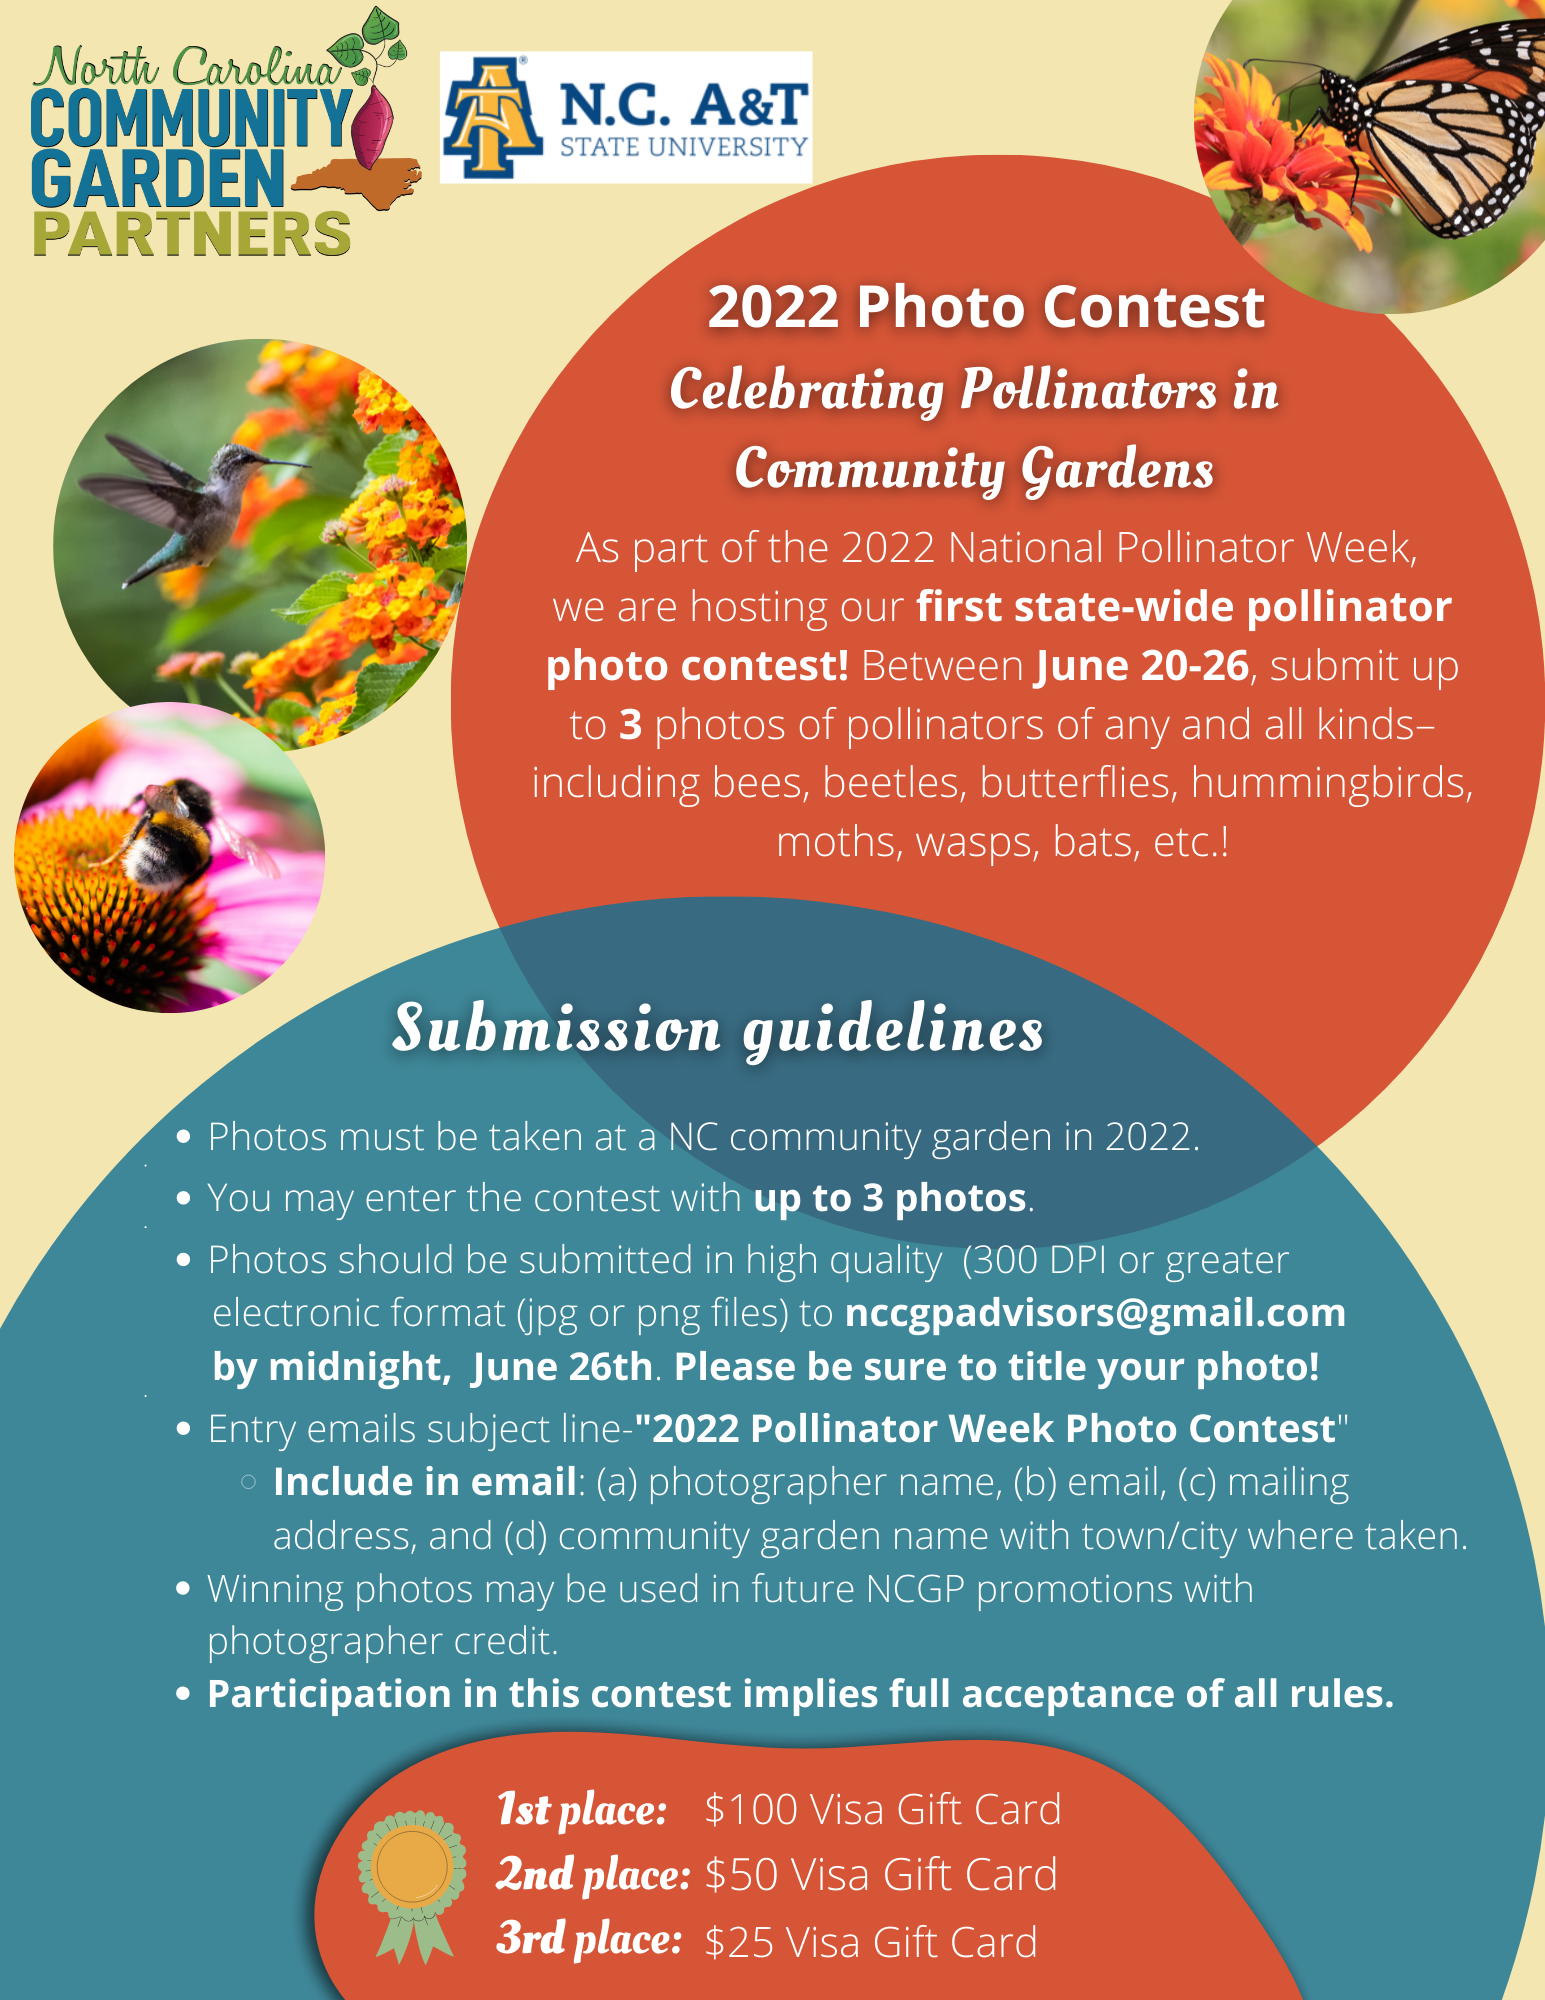 North Carolina Community Garden Partners 2022 Photo Contest, Celebrating Pollinators in Community Gardens. June 20-26.